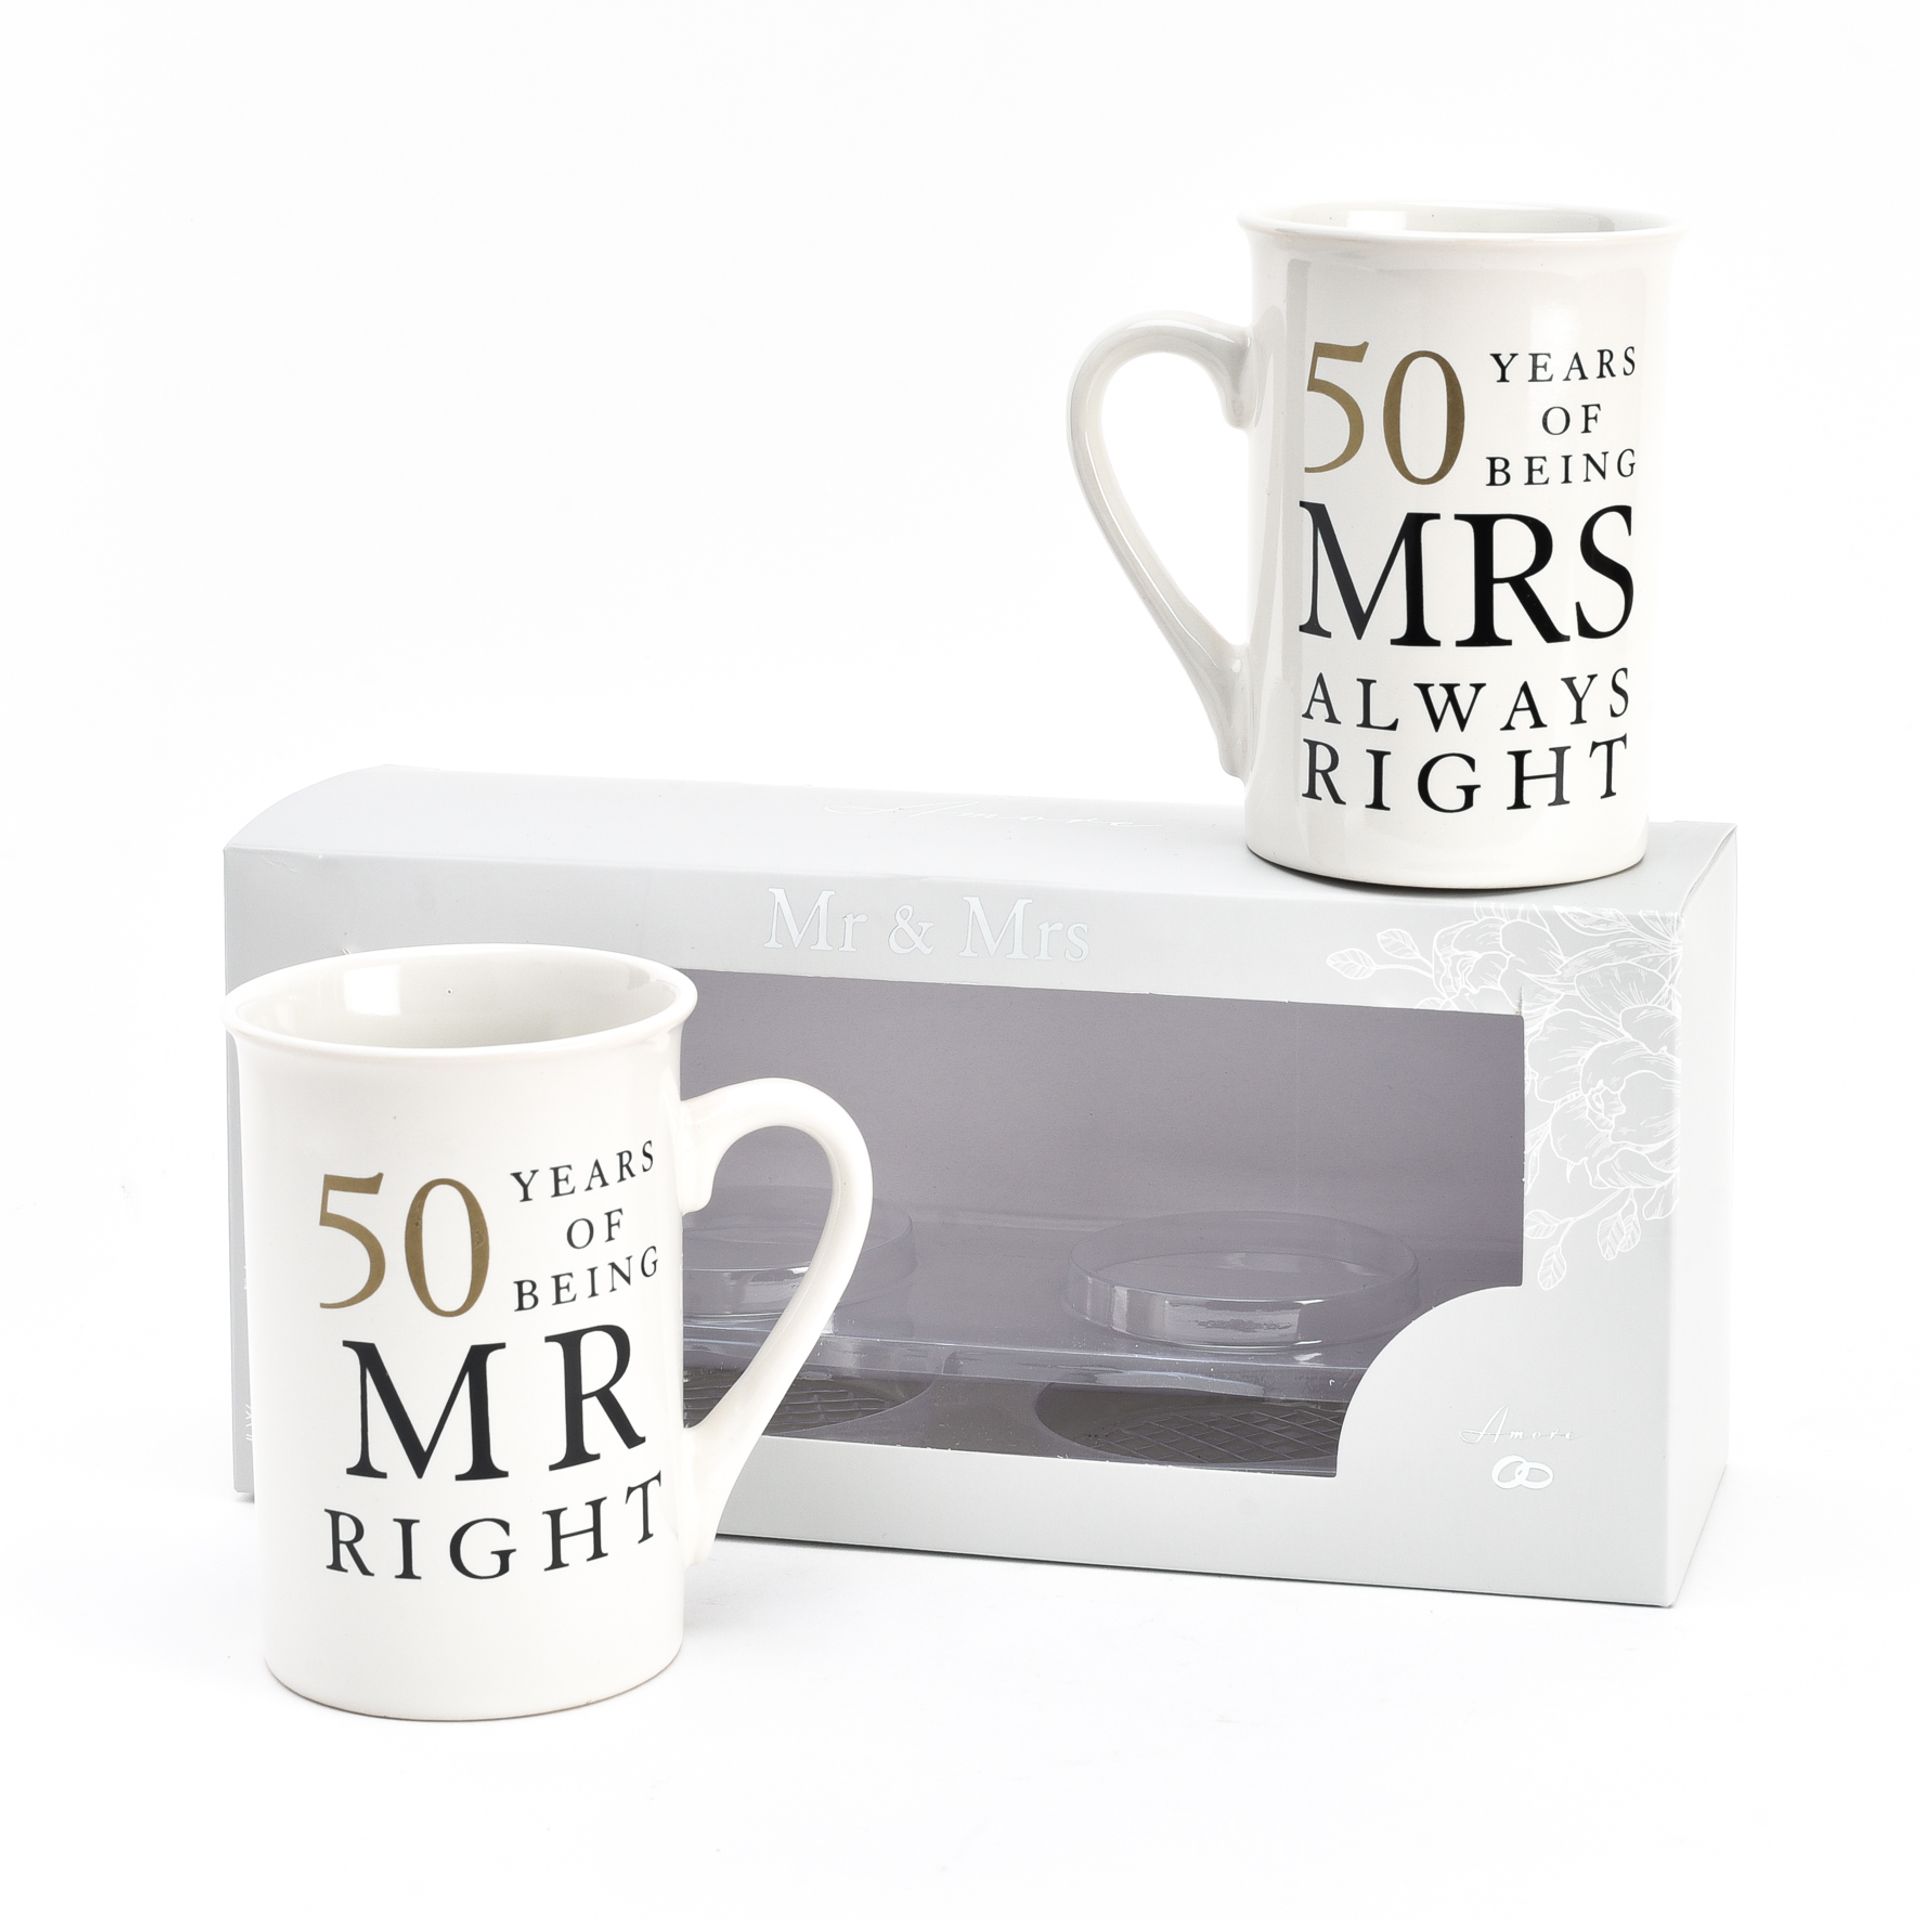 Widdop 50th Wedding Anniversary Mr and Mrs Right Mugs